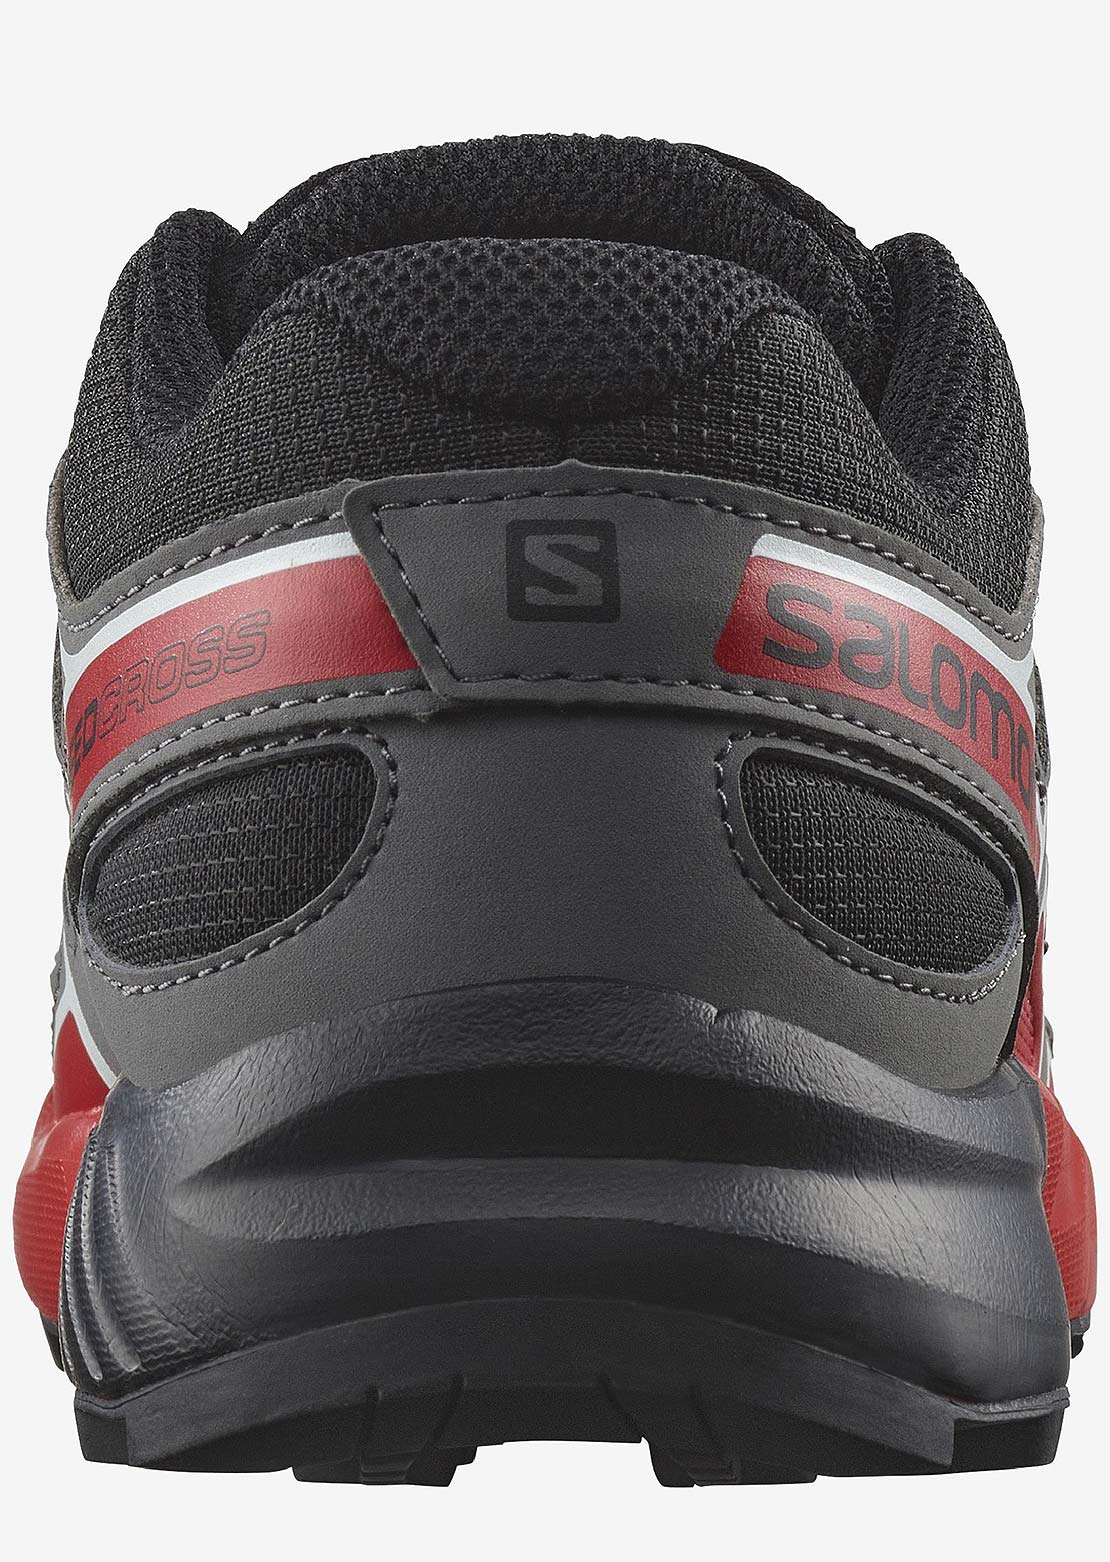 Salomon Junior Speedcross Shoes Black/Qush/Hgrsre